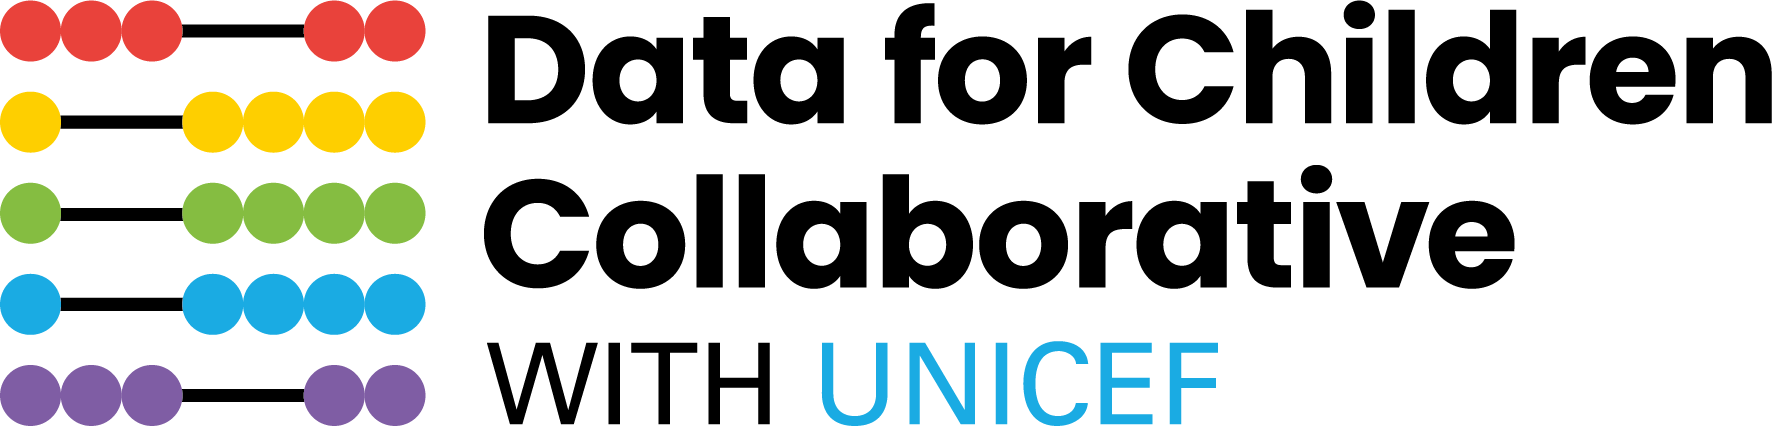 Logo for the Data for Children Collaborative UNICEF